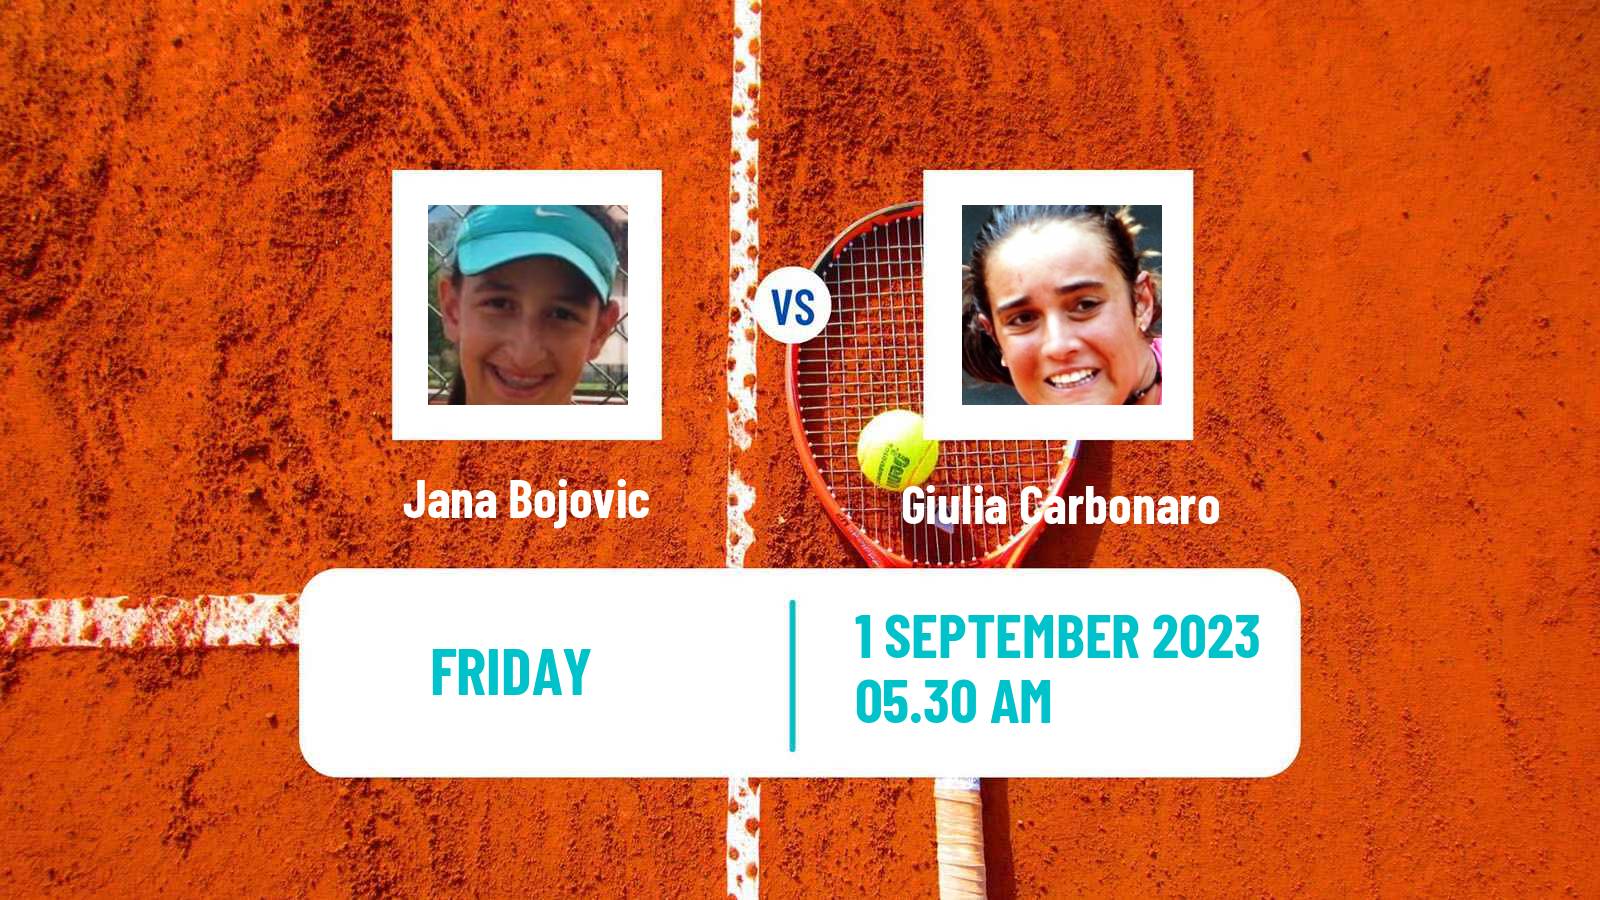 Tennis ITF W15 Brasov 2 Women Jana Bojovic - Giulia Carbonaro